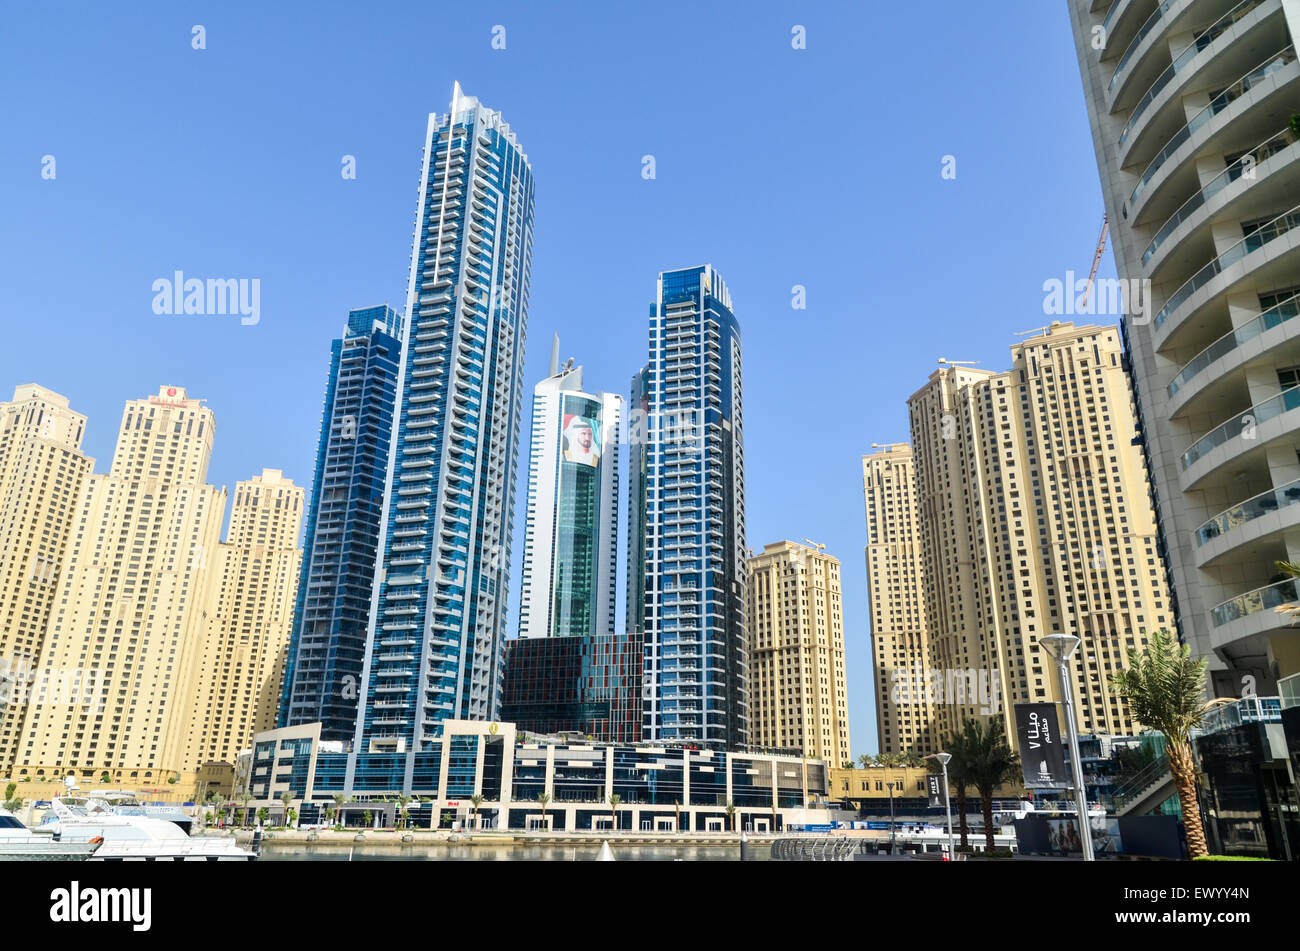 Futuristic and modern high rise buildings, towers and hotels of the Dubai Marina, United Arab Emirates Stock Photo